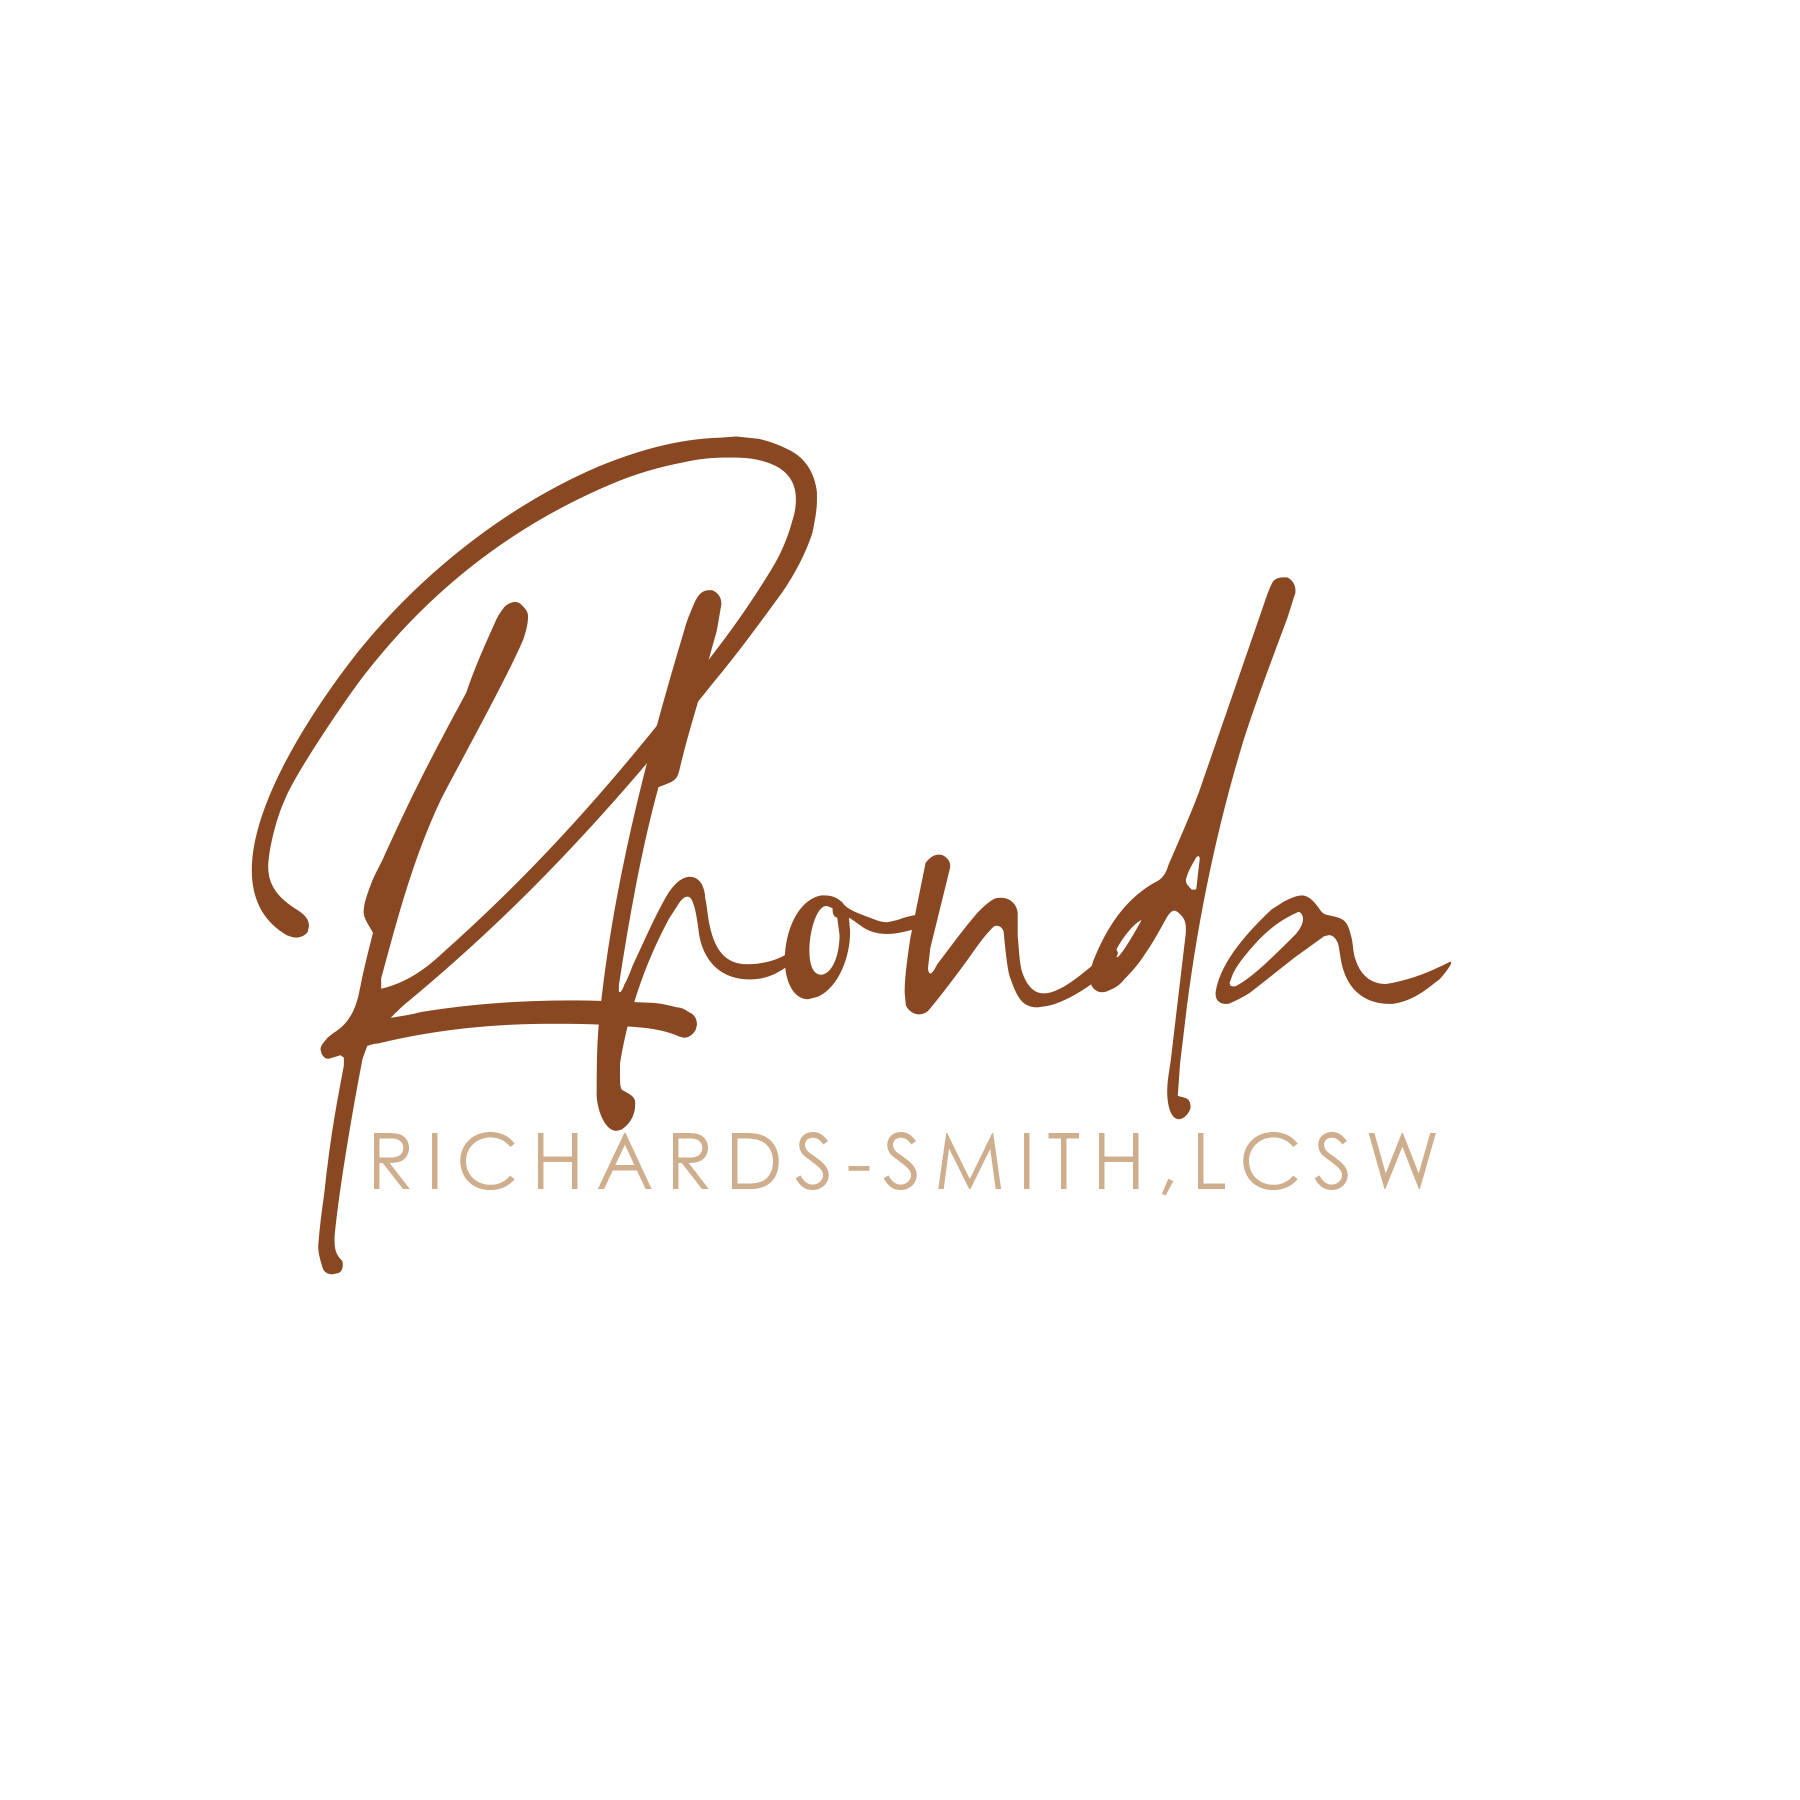 RHONDA RICHARDS-SMITH